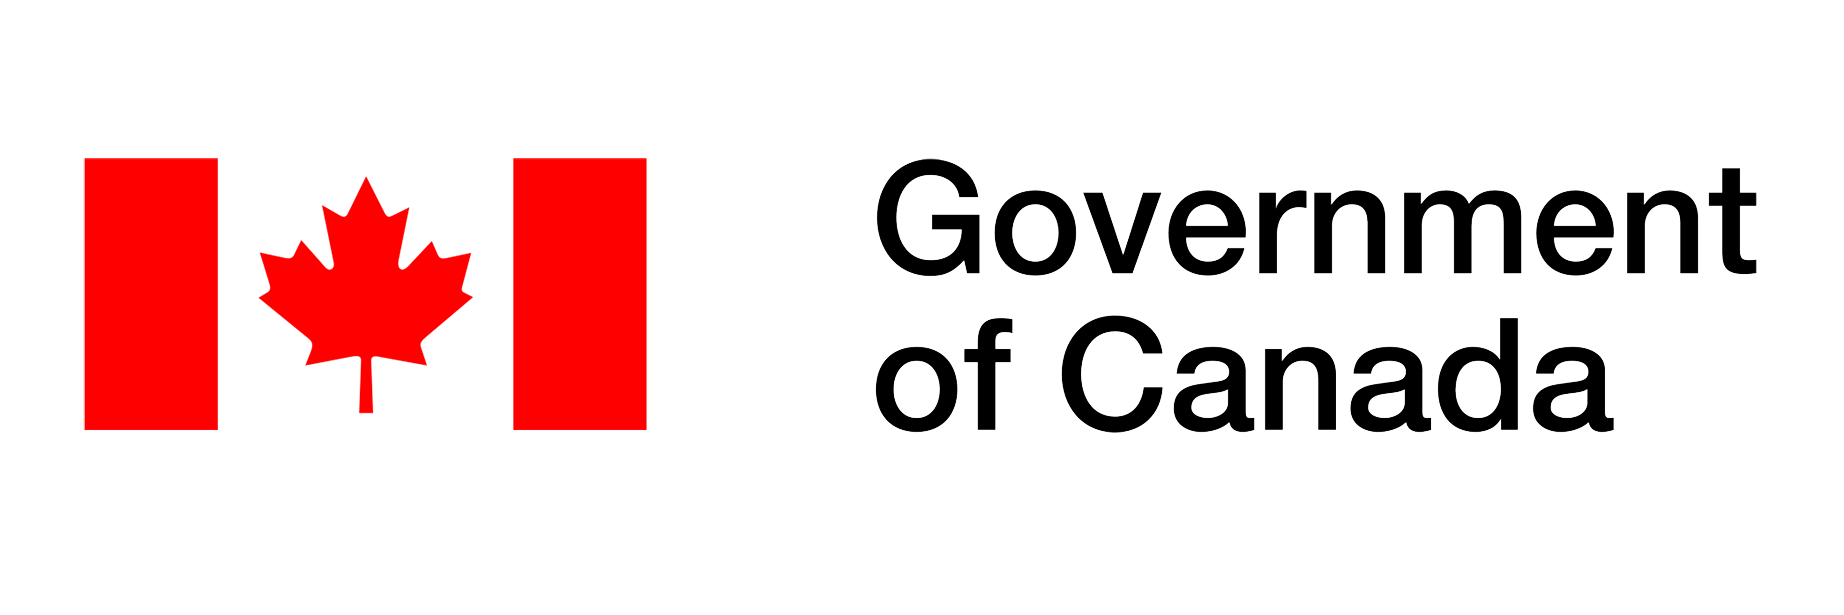 government of canada logo no background